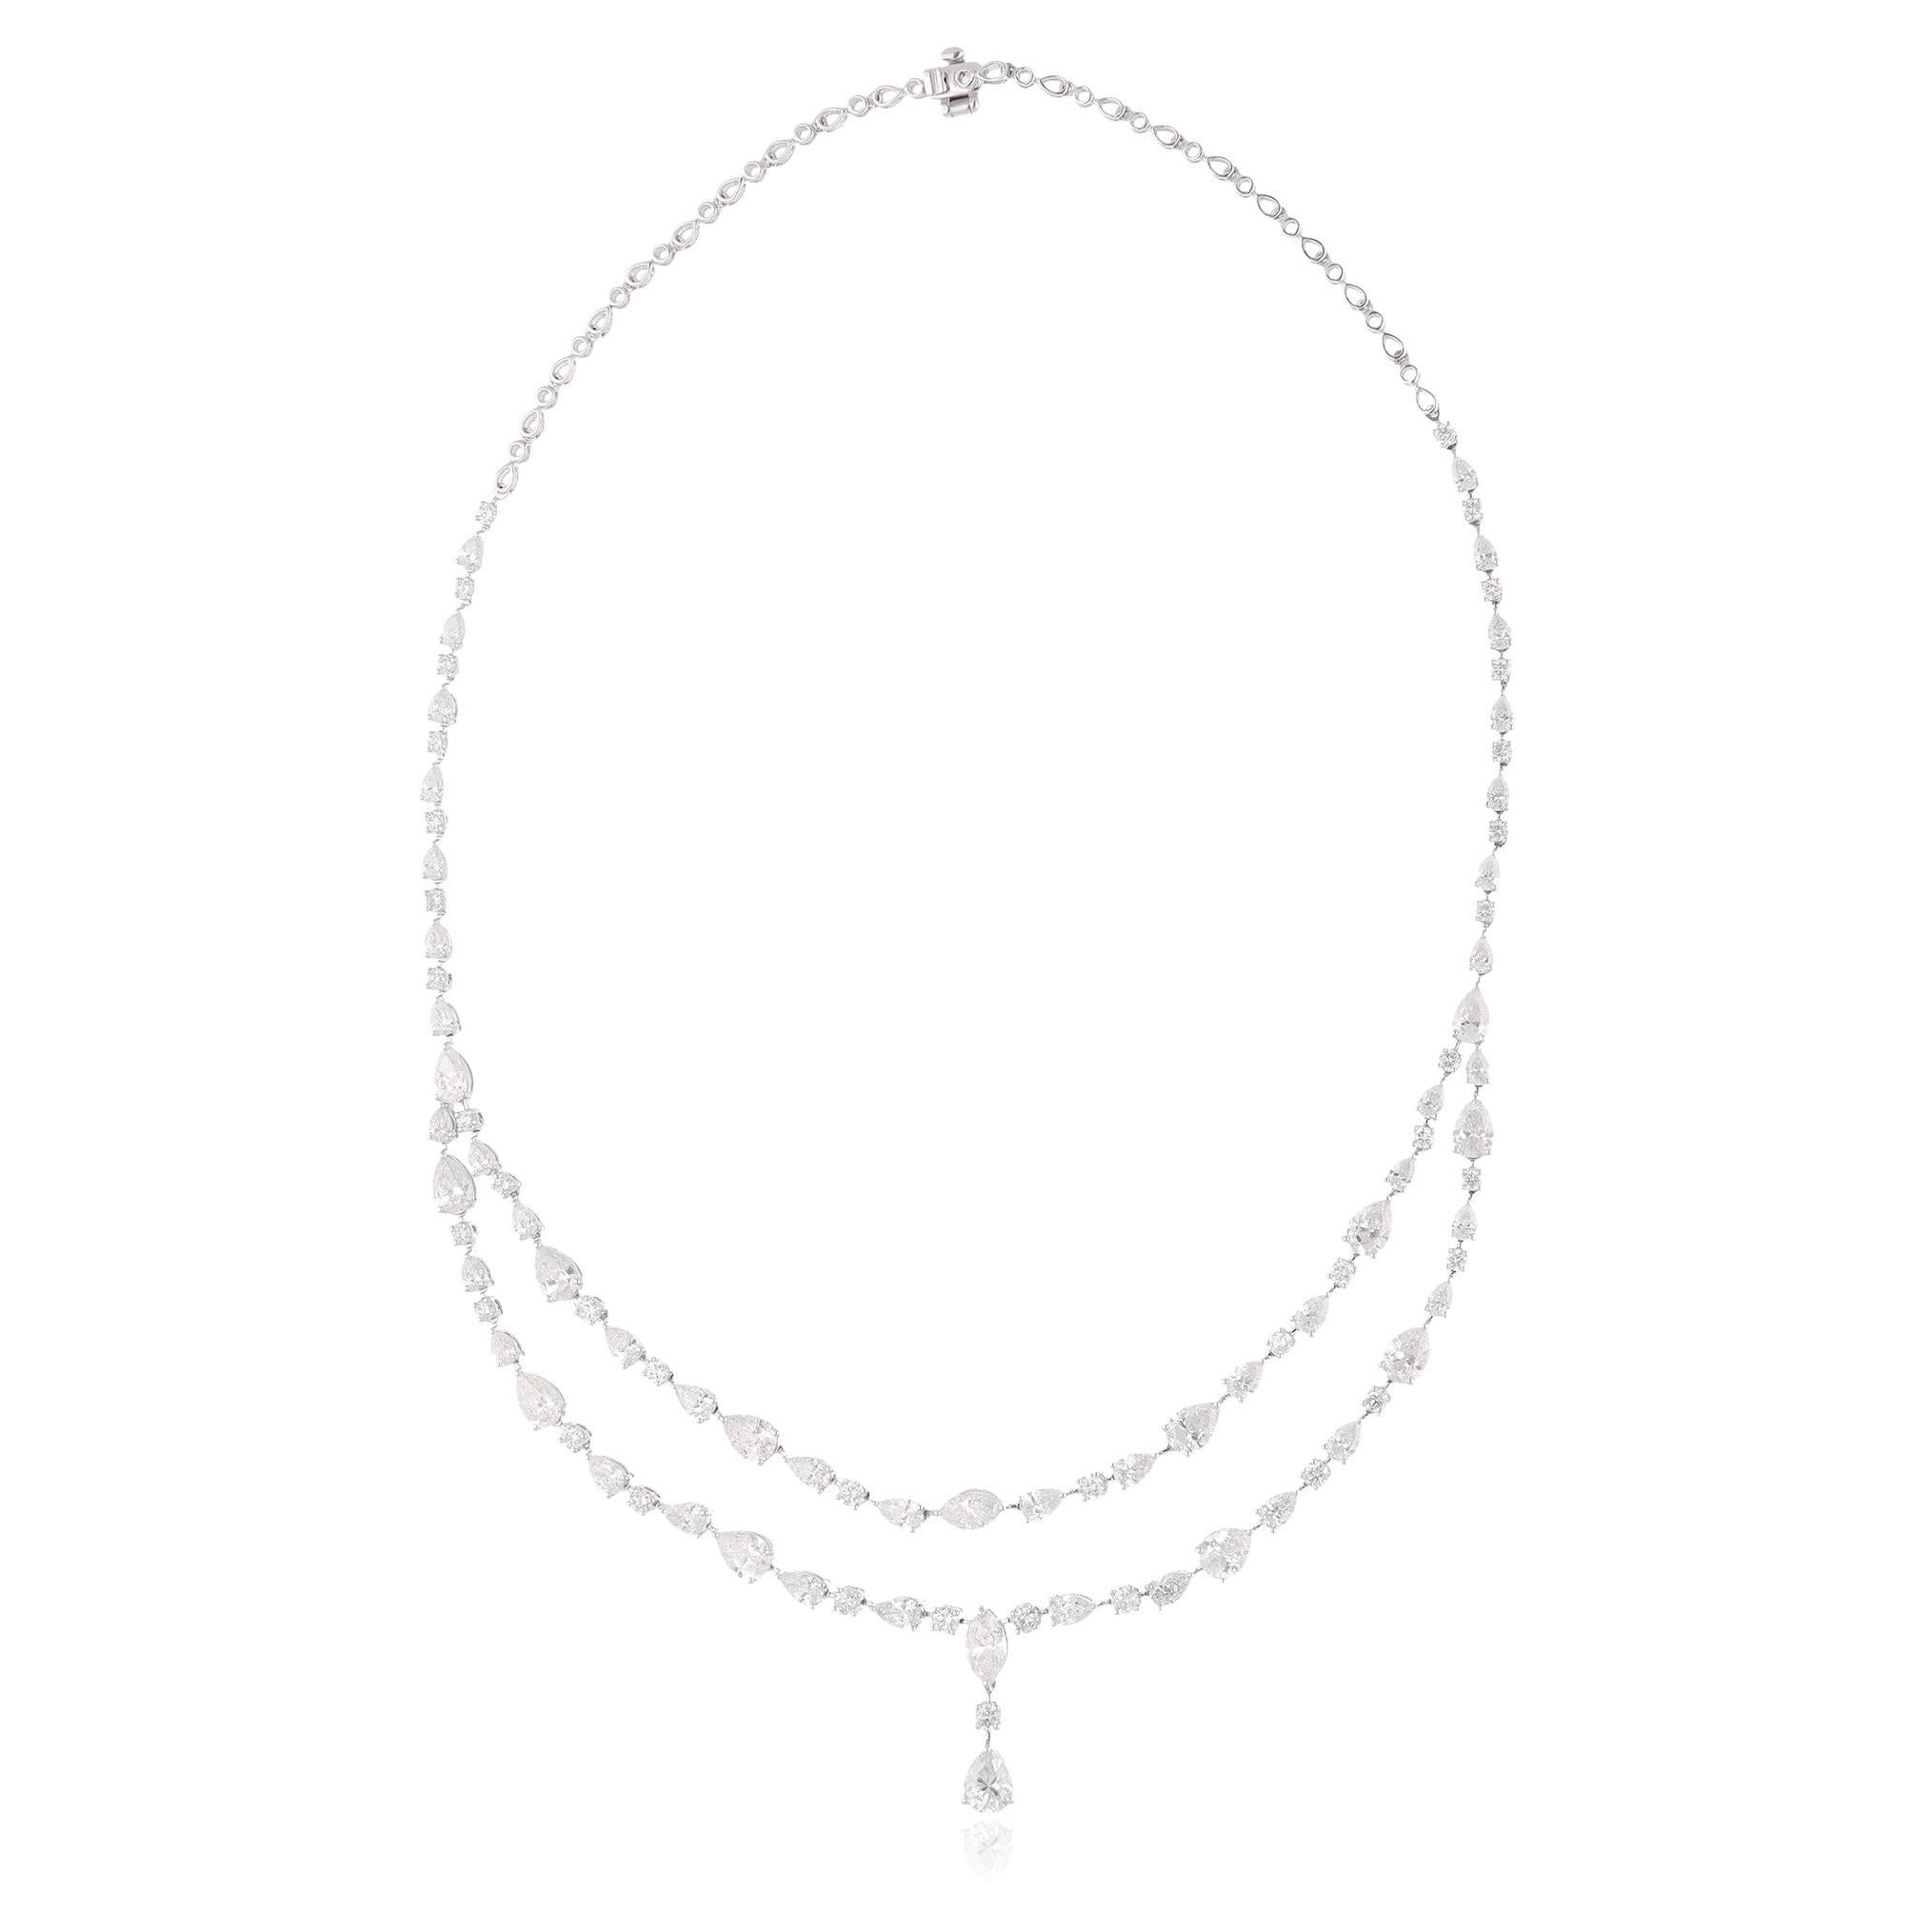 Natural 14.13 Carat Diamond Necklace 18 Karat White Gold Handmade Fine Jewelry